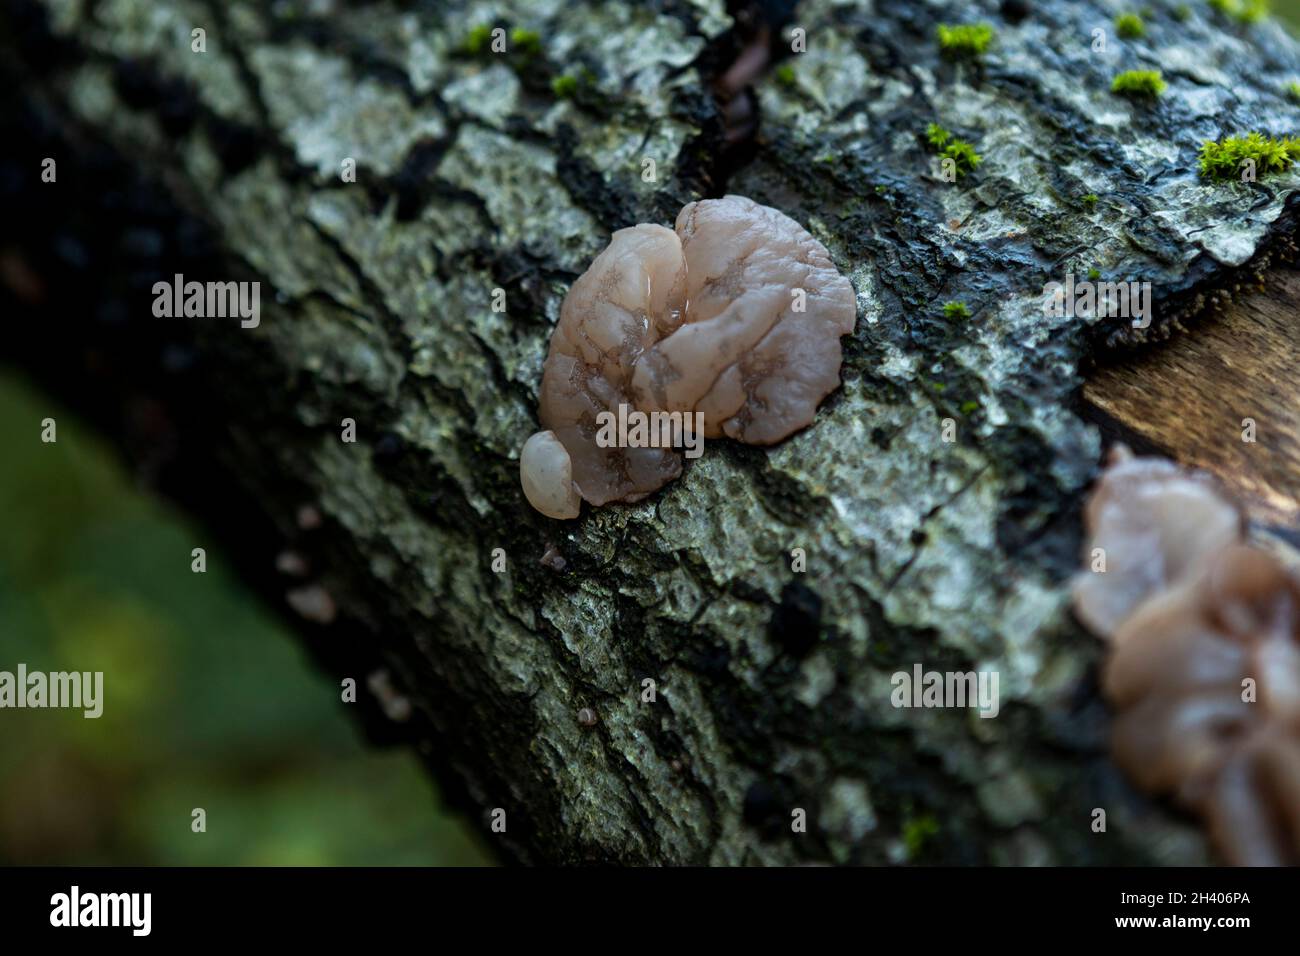 Autumn, Forest of Dean, England. Exidia nucleata - Crystal Brain Fungus Stock Photo